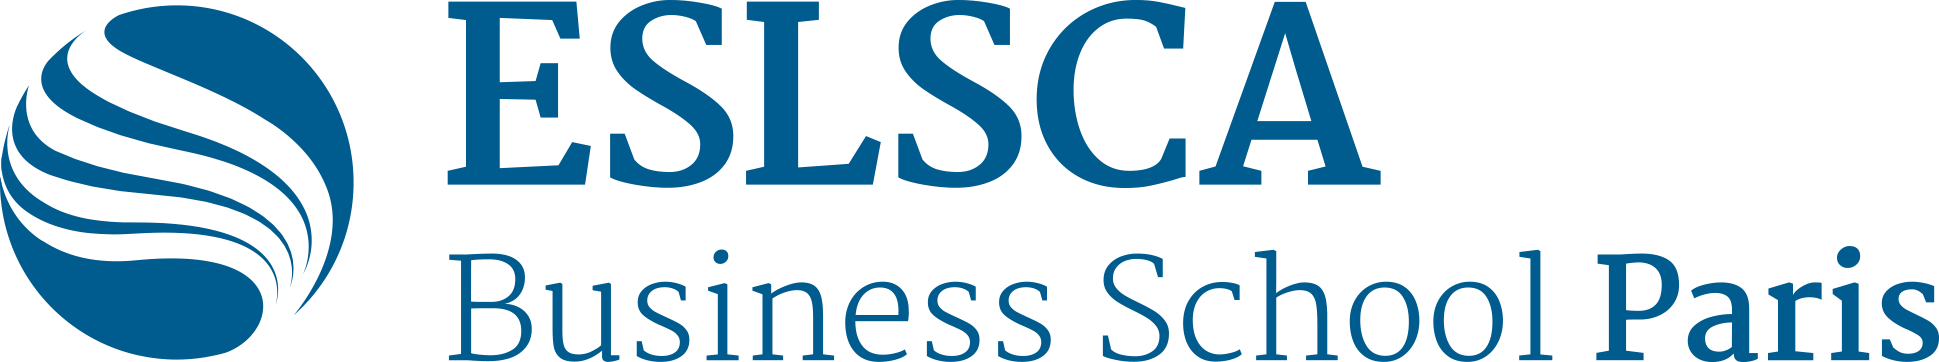 Logo of  ESLSCA Business School Paris